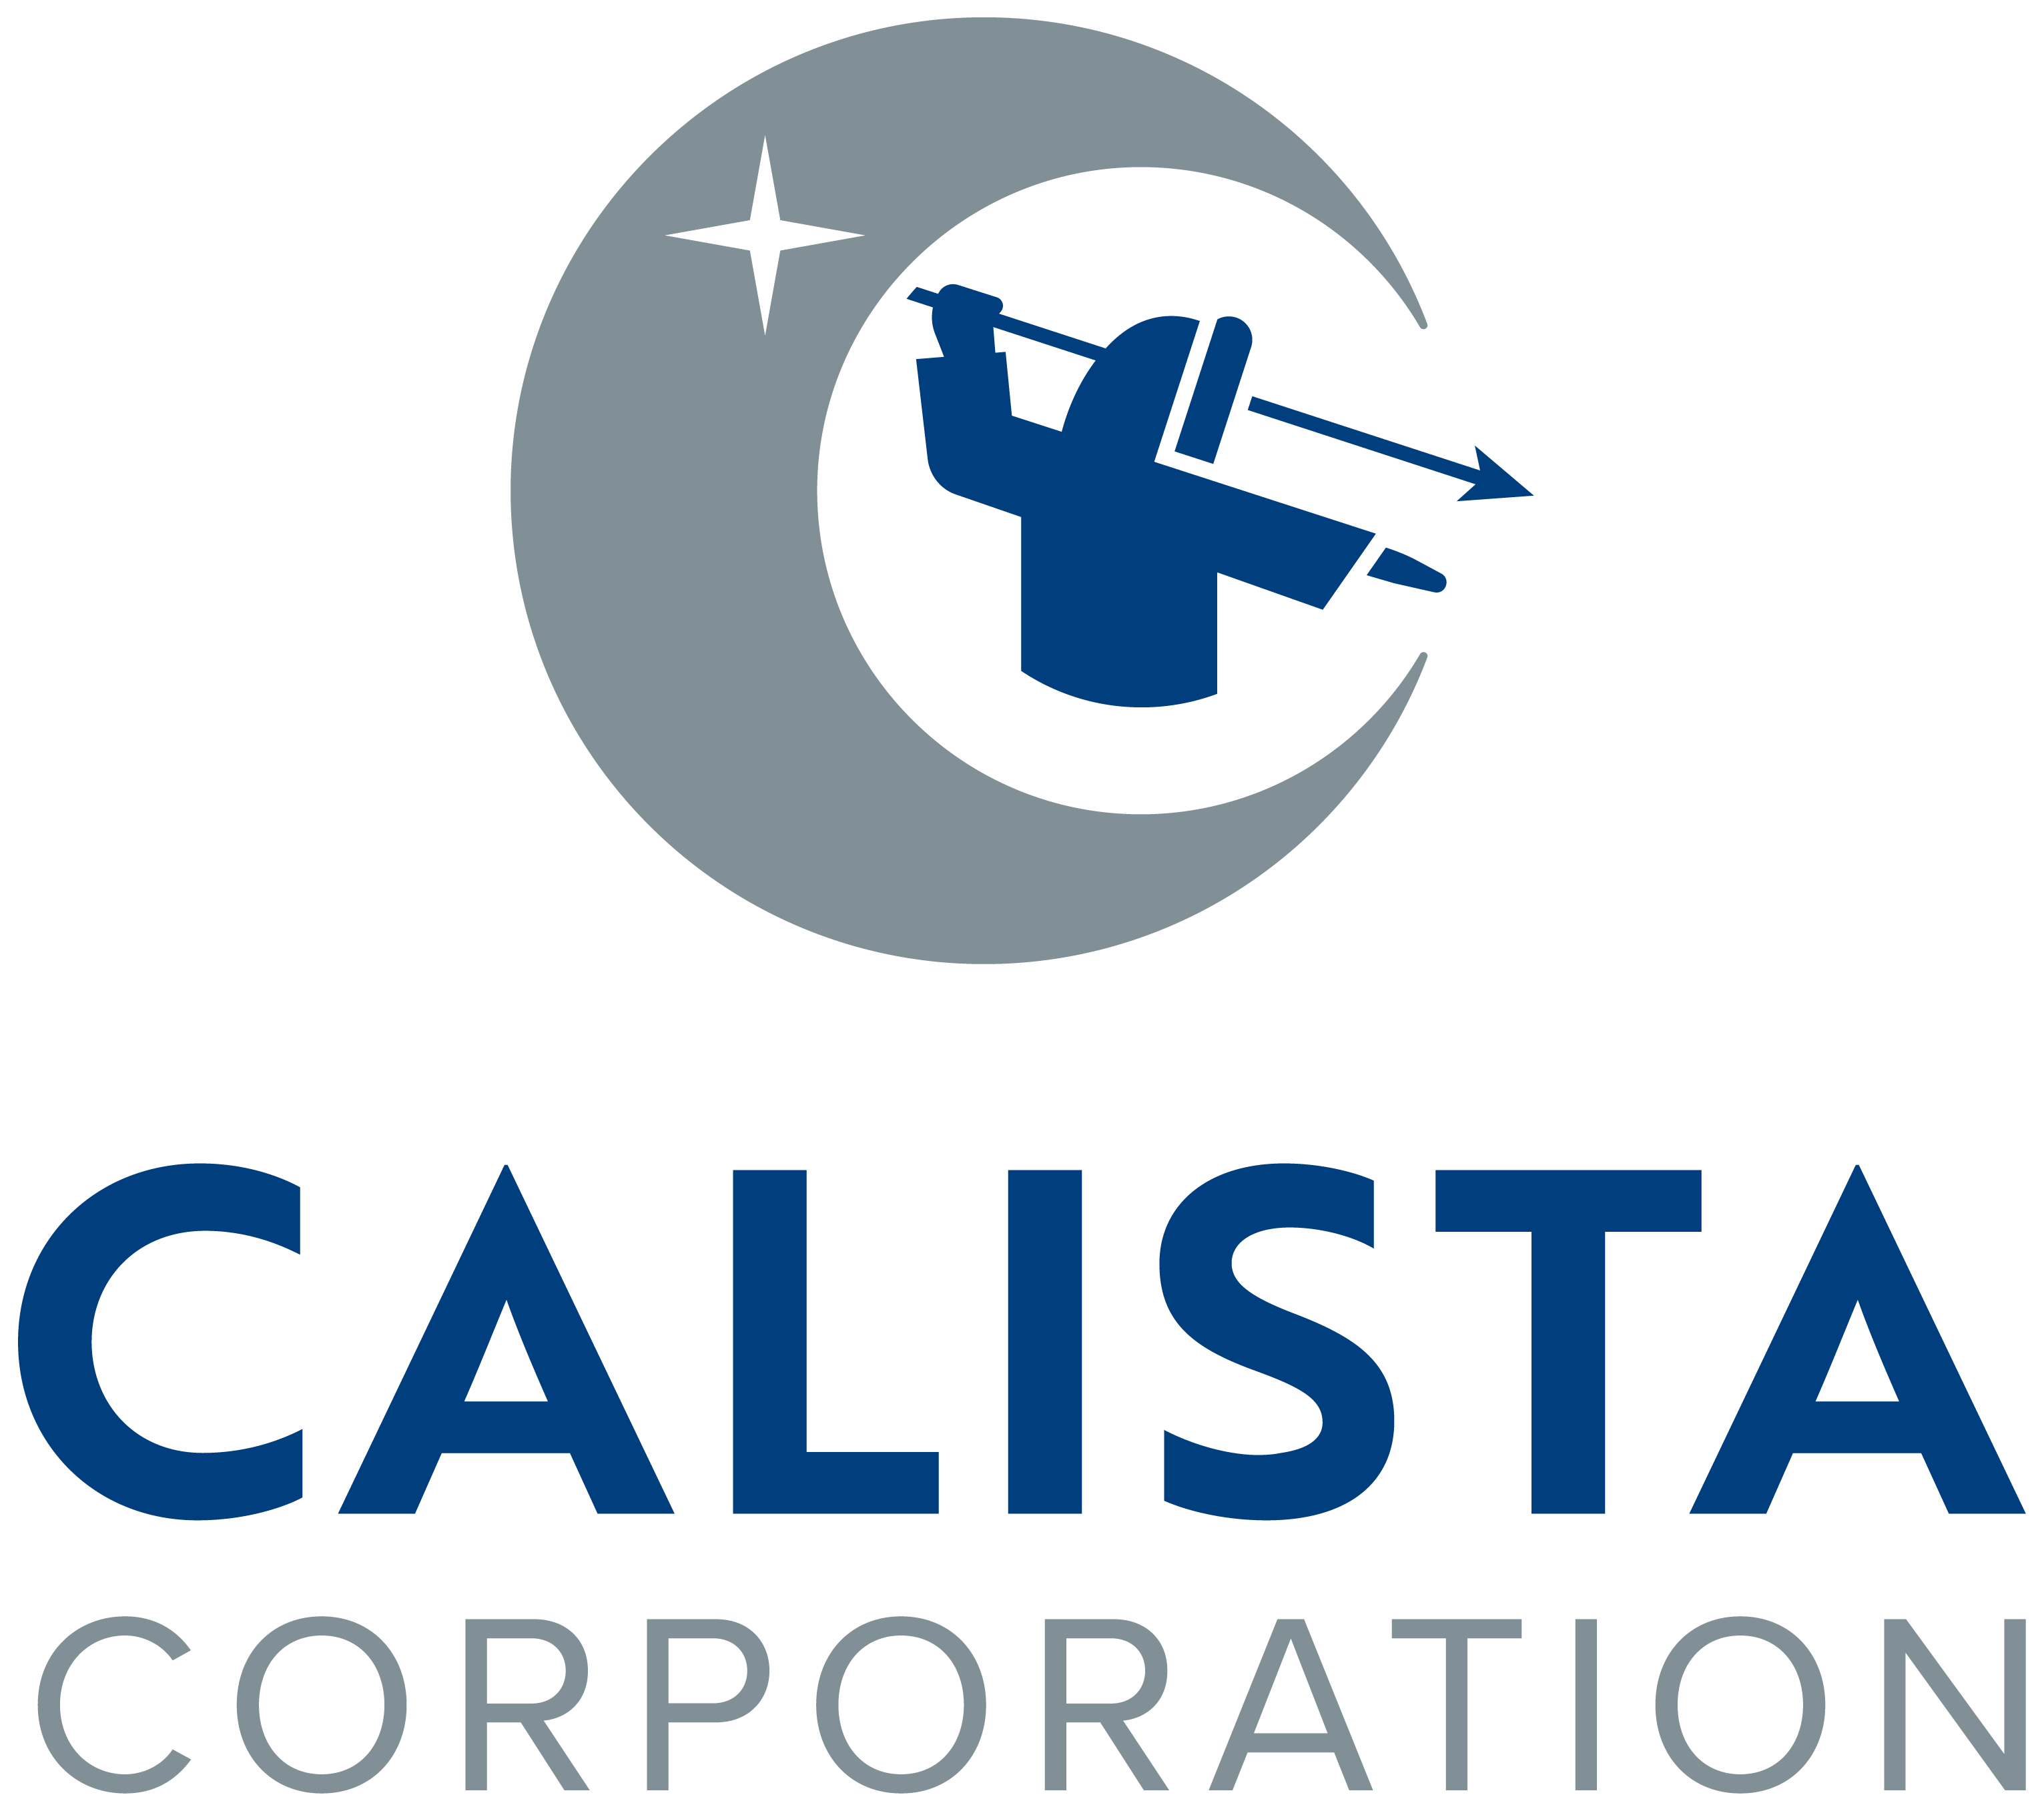 Calista Corp